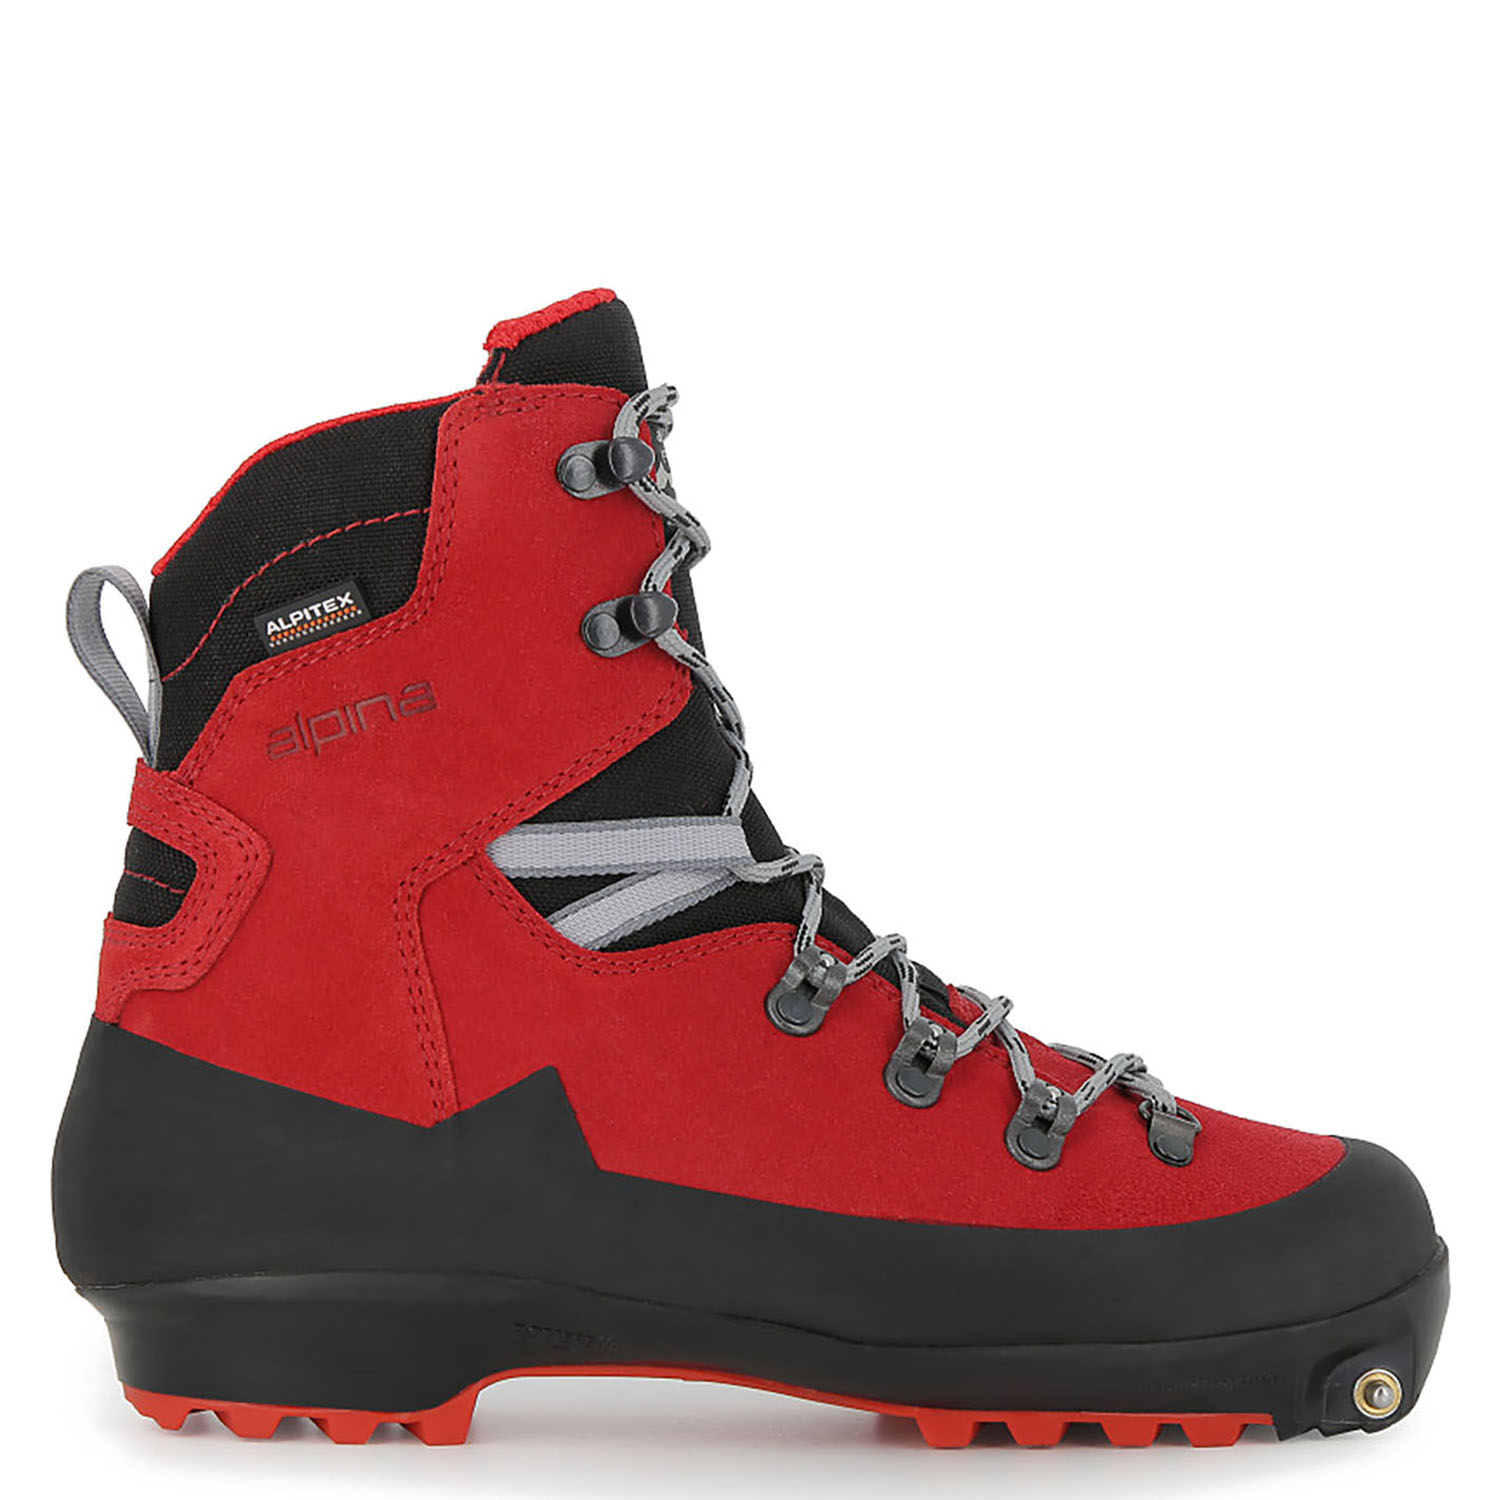 Boot 2024. Ботинки Alpina ESK 2.0. Alpina Cross track ботинки зимние. Ботинки туристические Sabo Альпина. Ботинки Alaska extreme Lite.